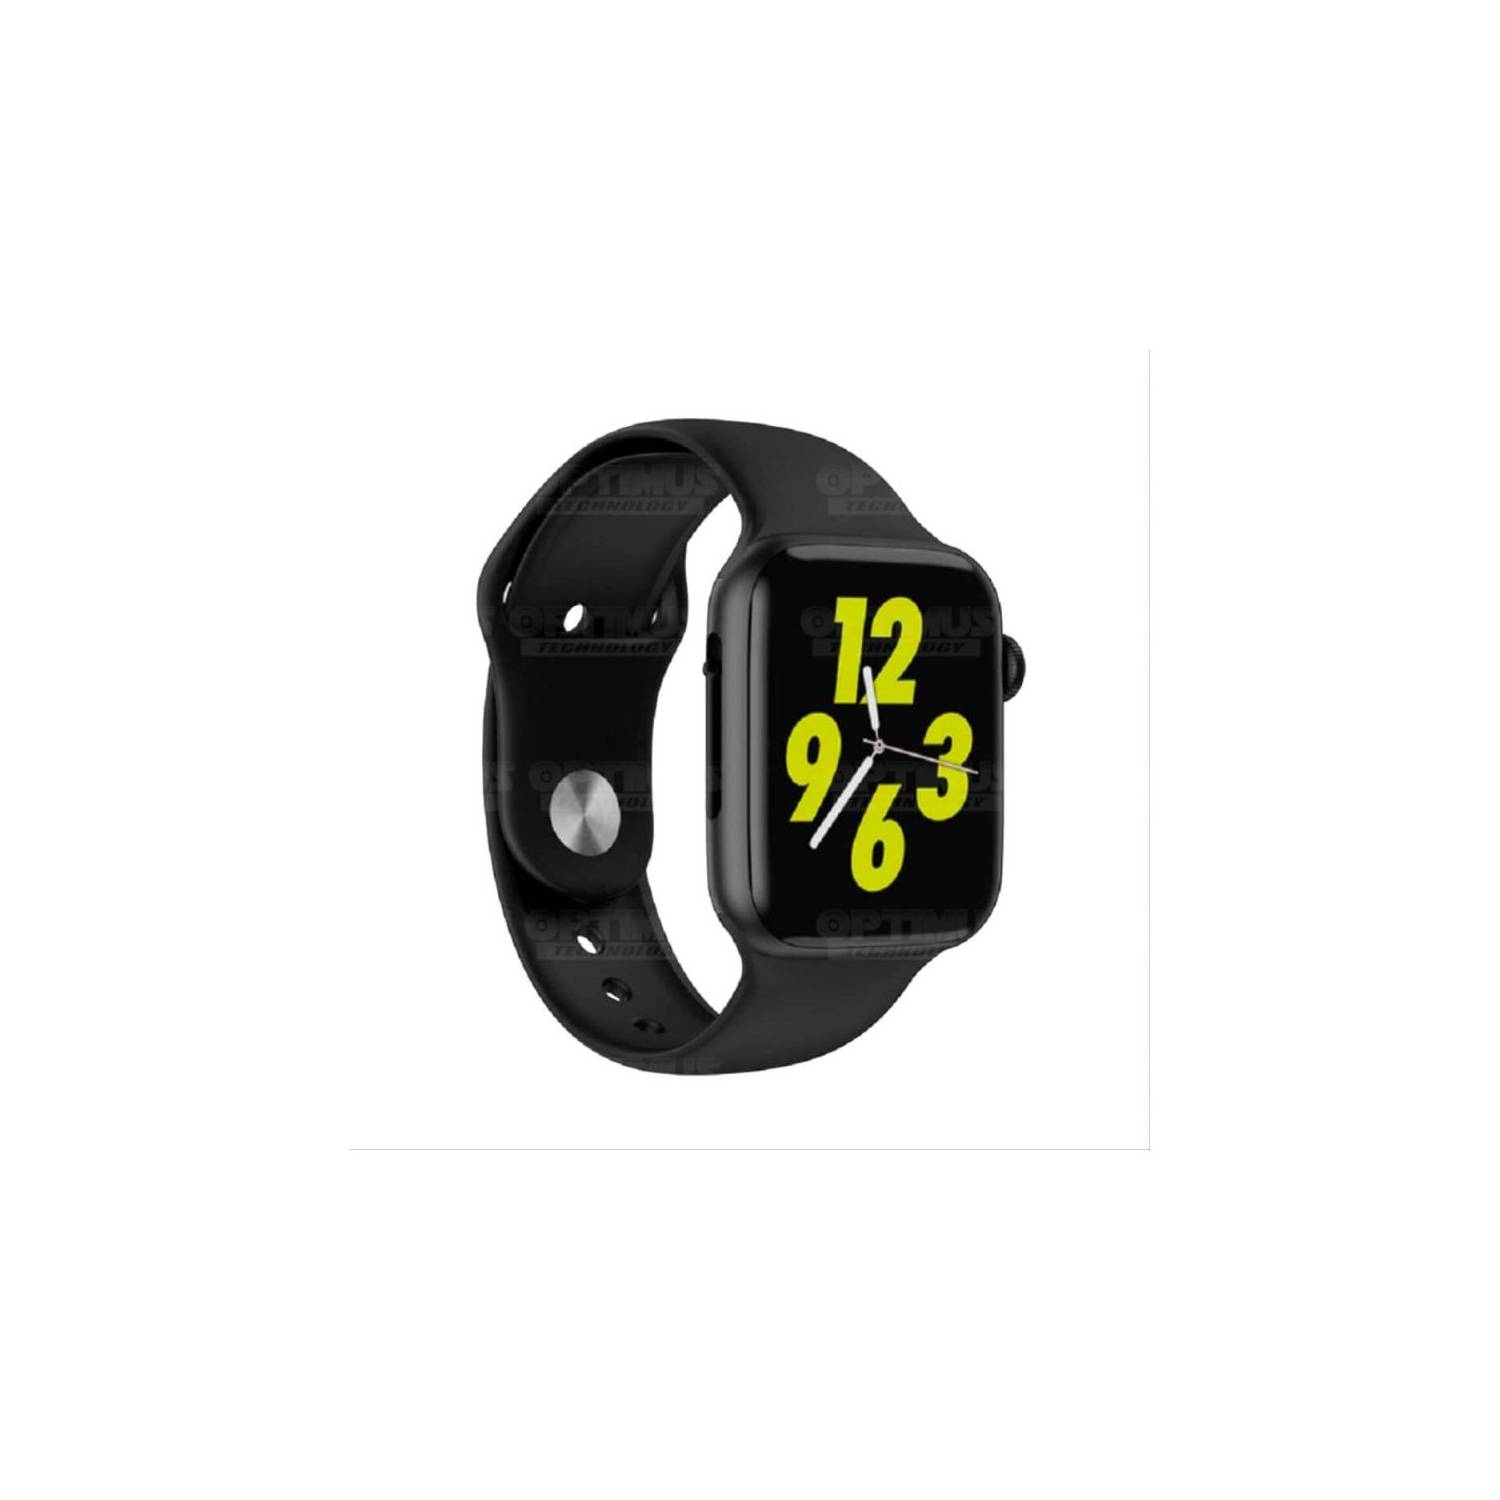 Destino solamente es suficiente Reloj inteligente smartwatch pk w34 iwo 10 12 notificaciones GENERICO |  falabella.com